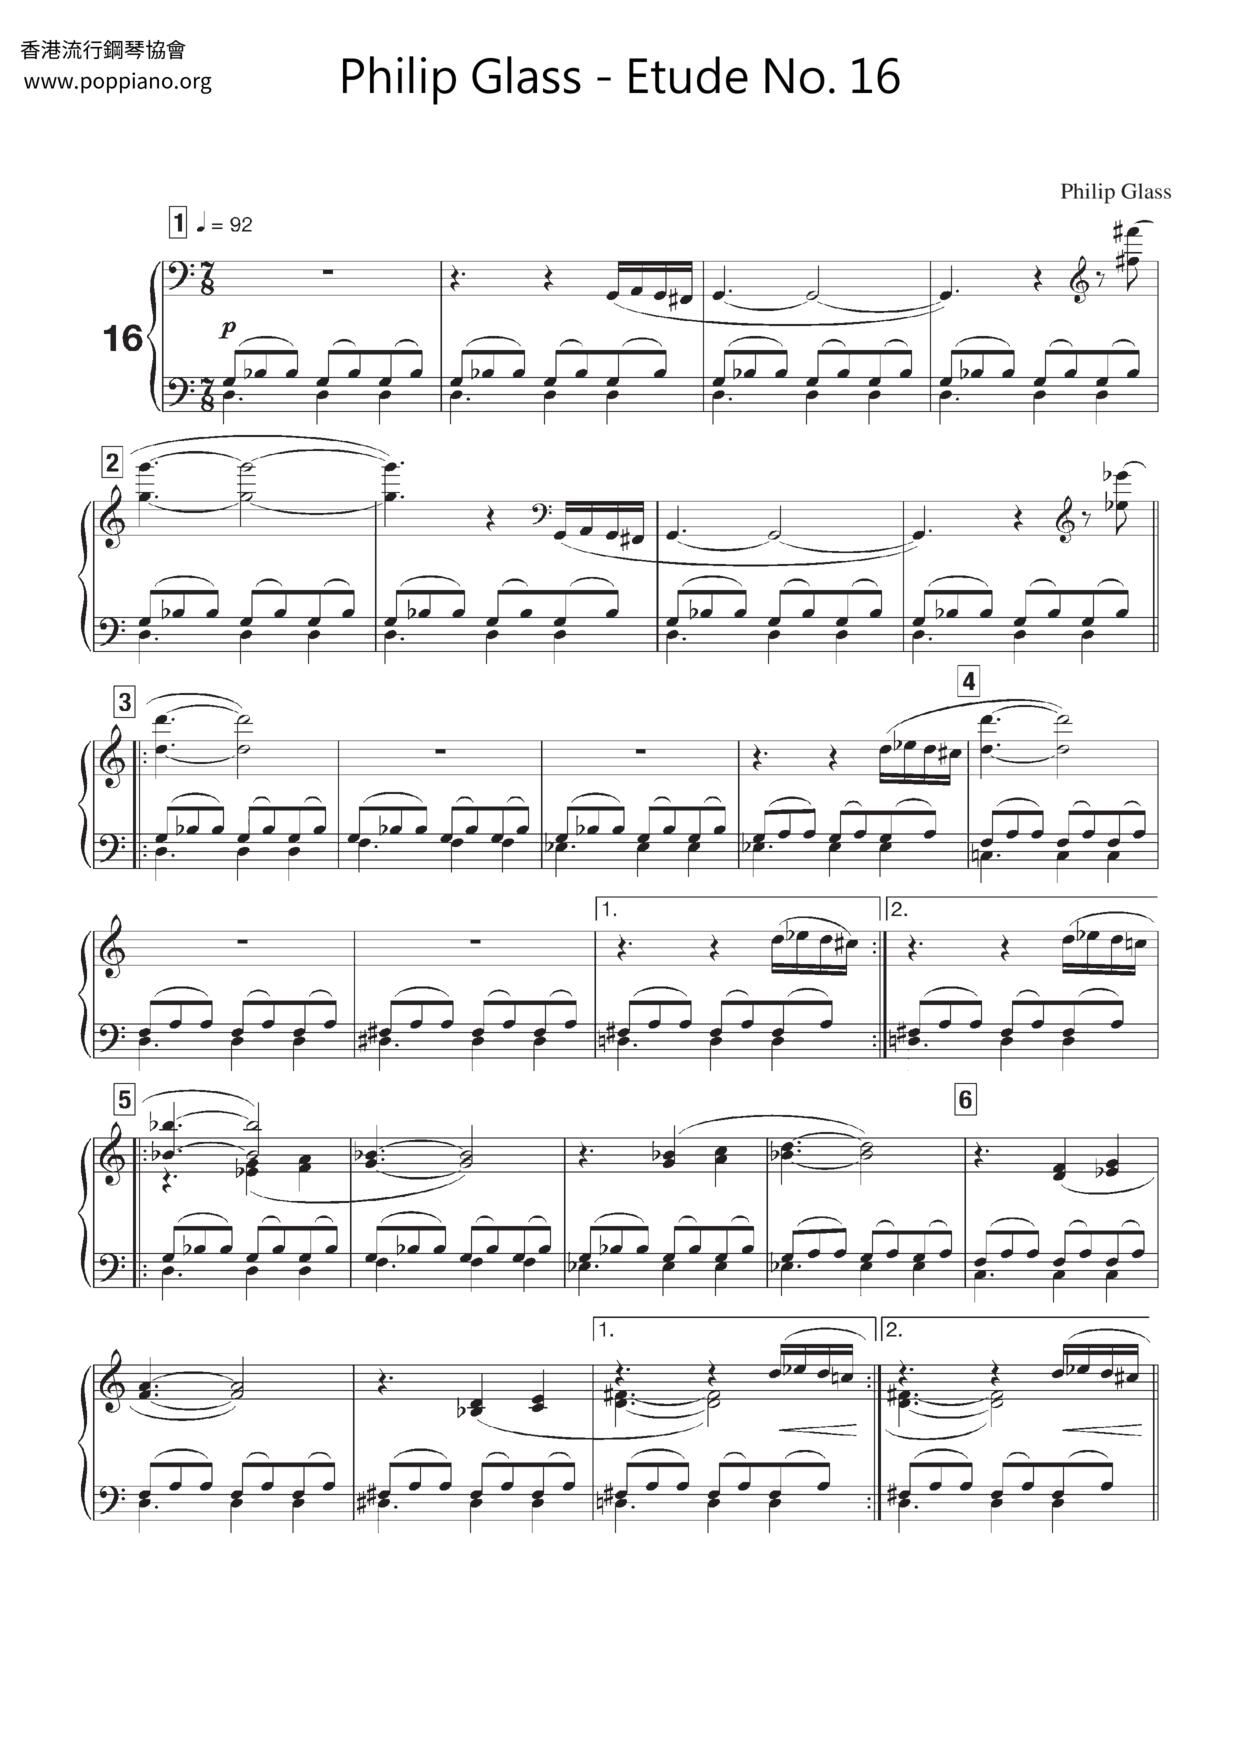 Etude No. 16ピアノ譜